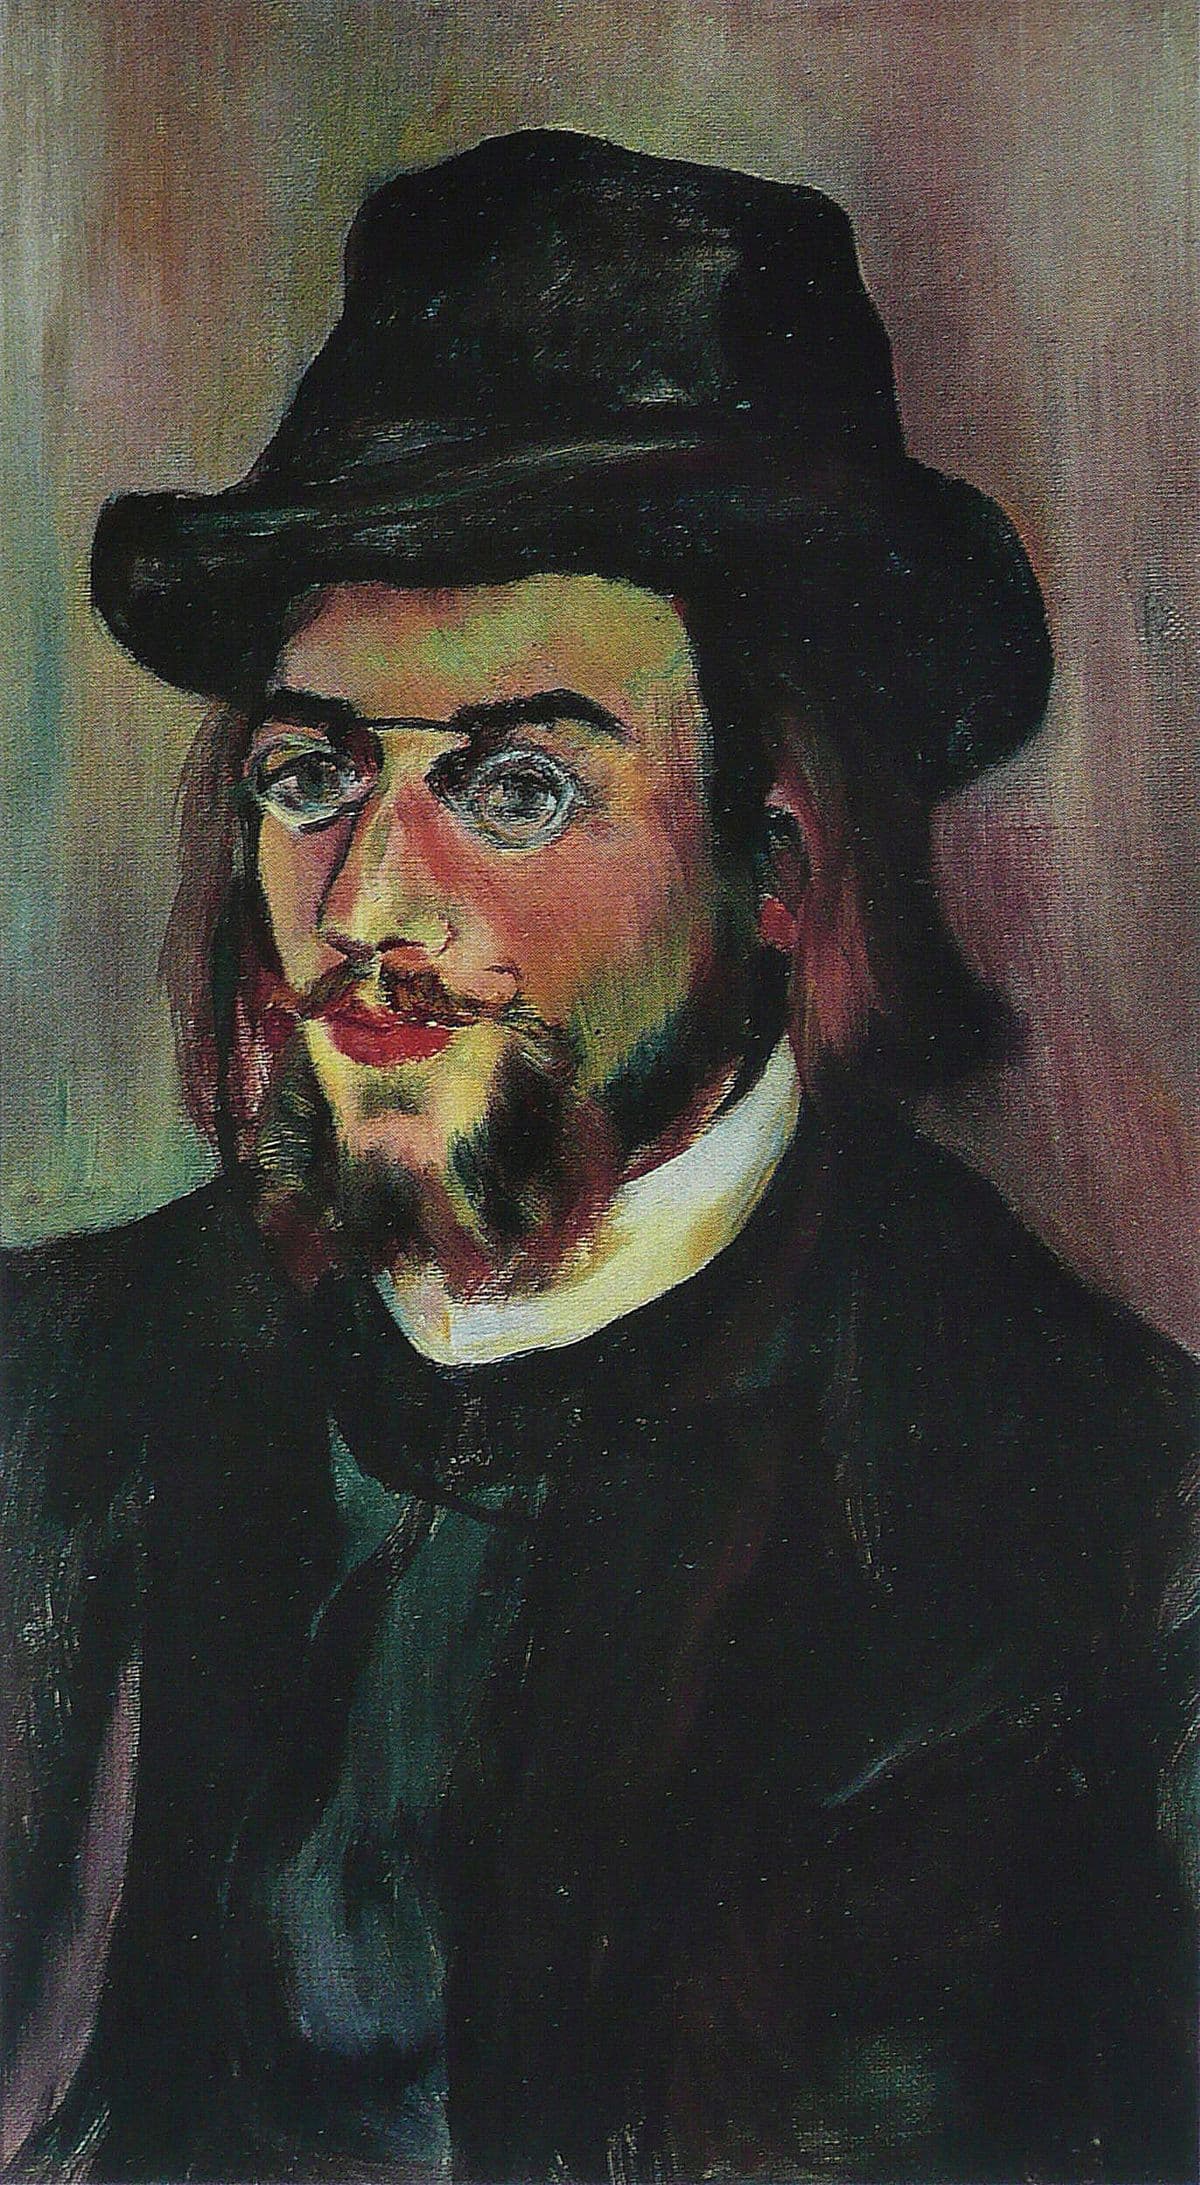 Suzanne Valadon's portrait of Erik Satie